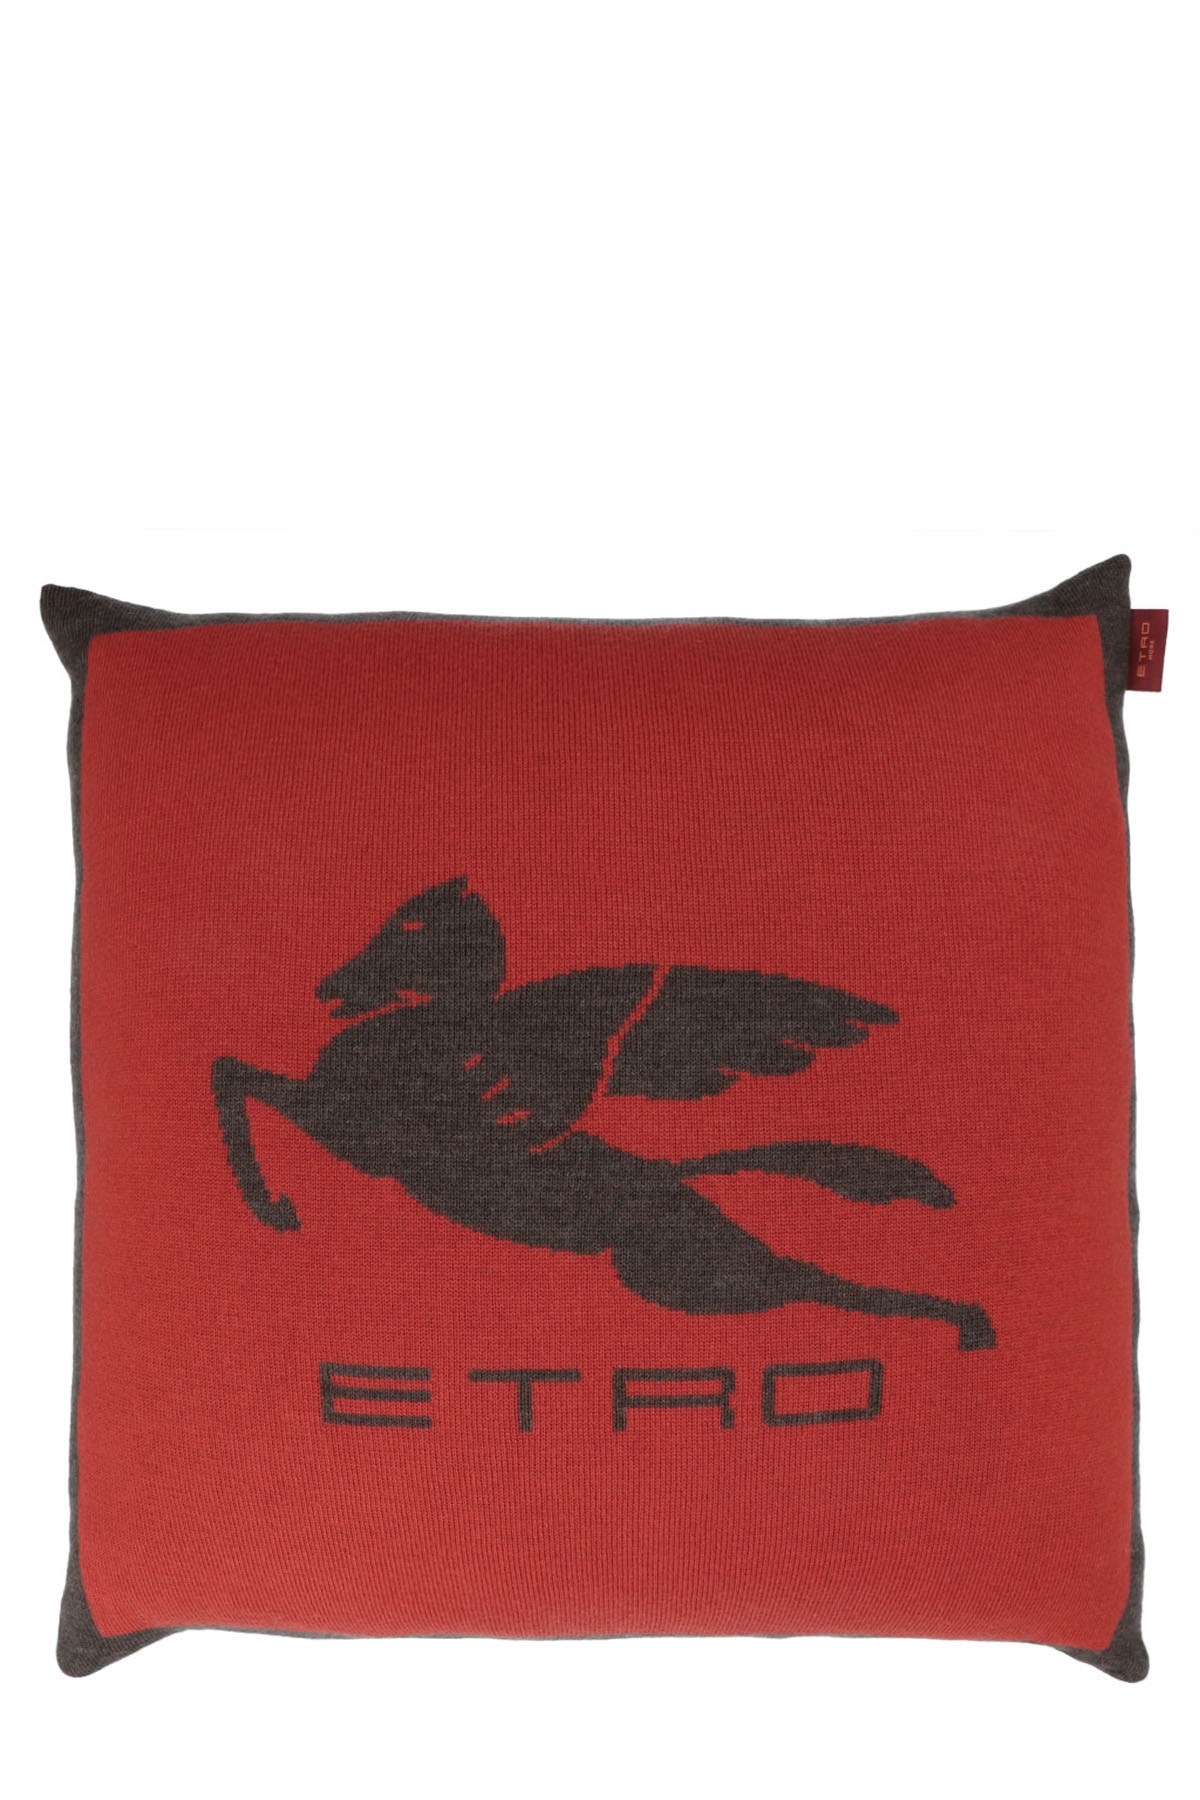 ETRO HOME 'Shanga' Knitted Pillow